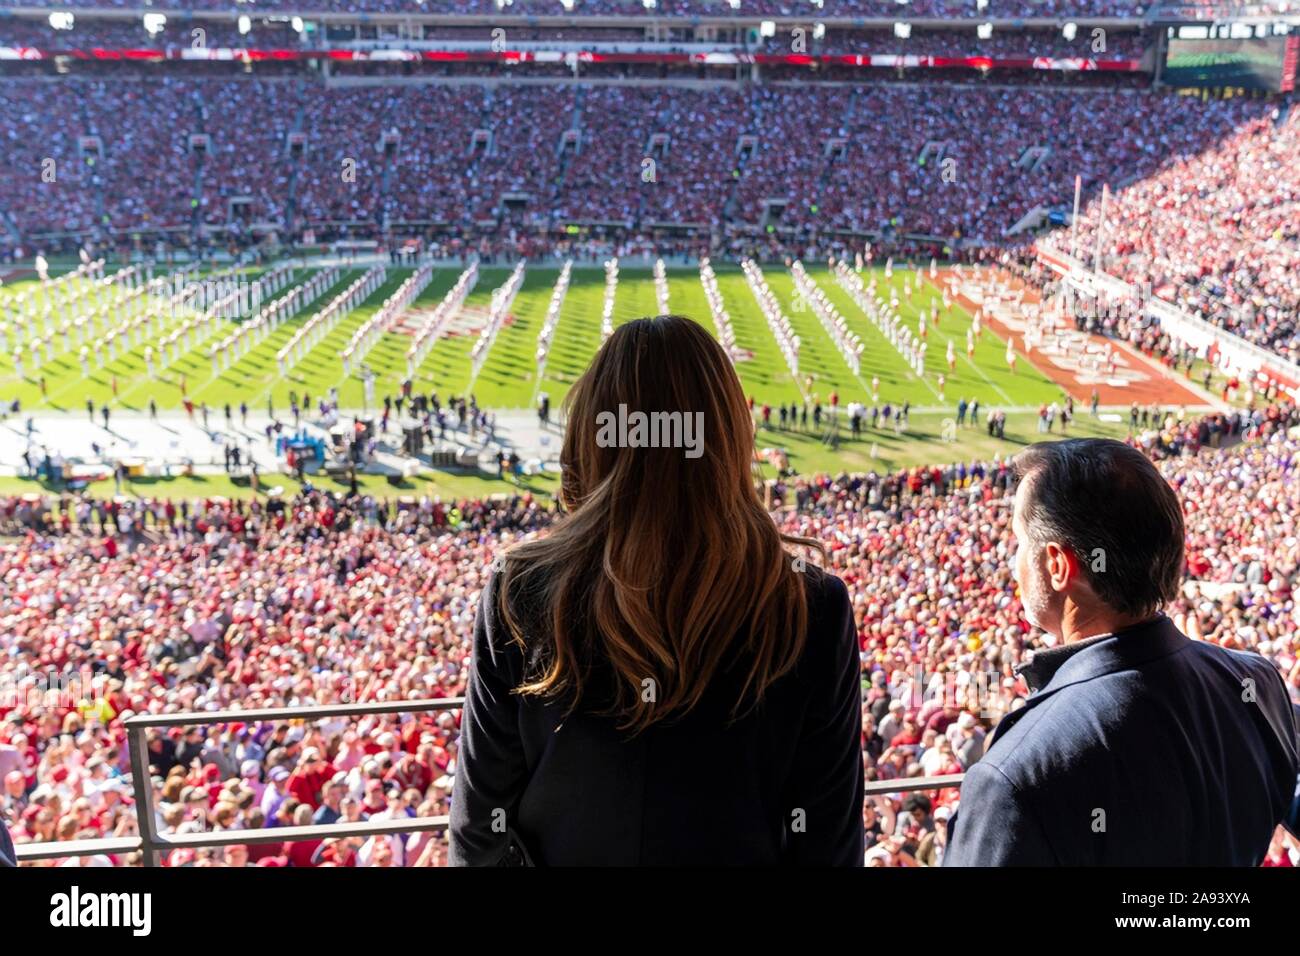 U.S First Lady Melania Trump watches the University of Alabama vs Louisiana State University football game at Bryant-Denny Stadium November 9, 2019 in Tuscaloosa, Alabama. Stock Photo